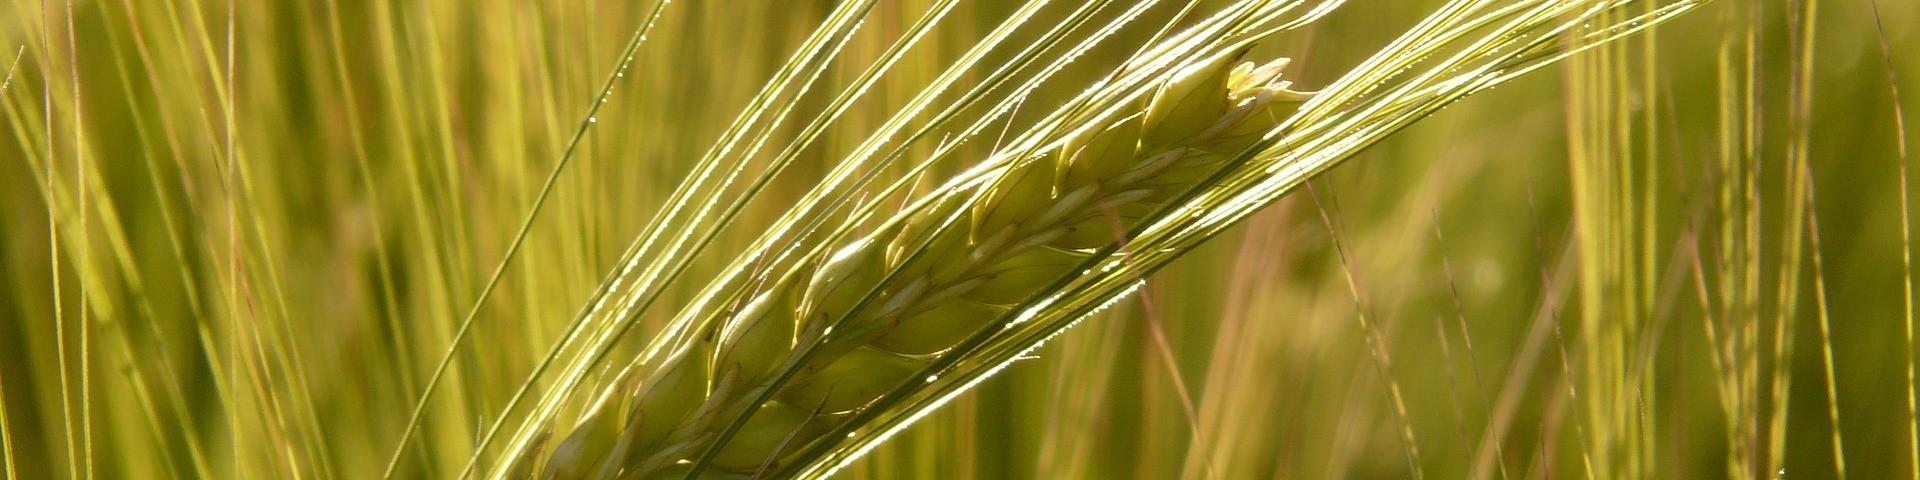  barley-field-8230_1920.jpg